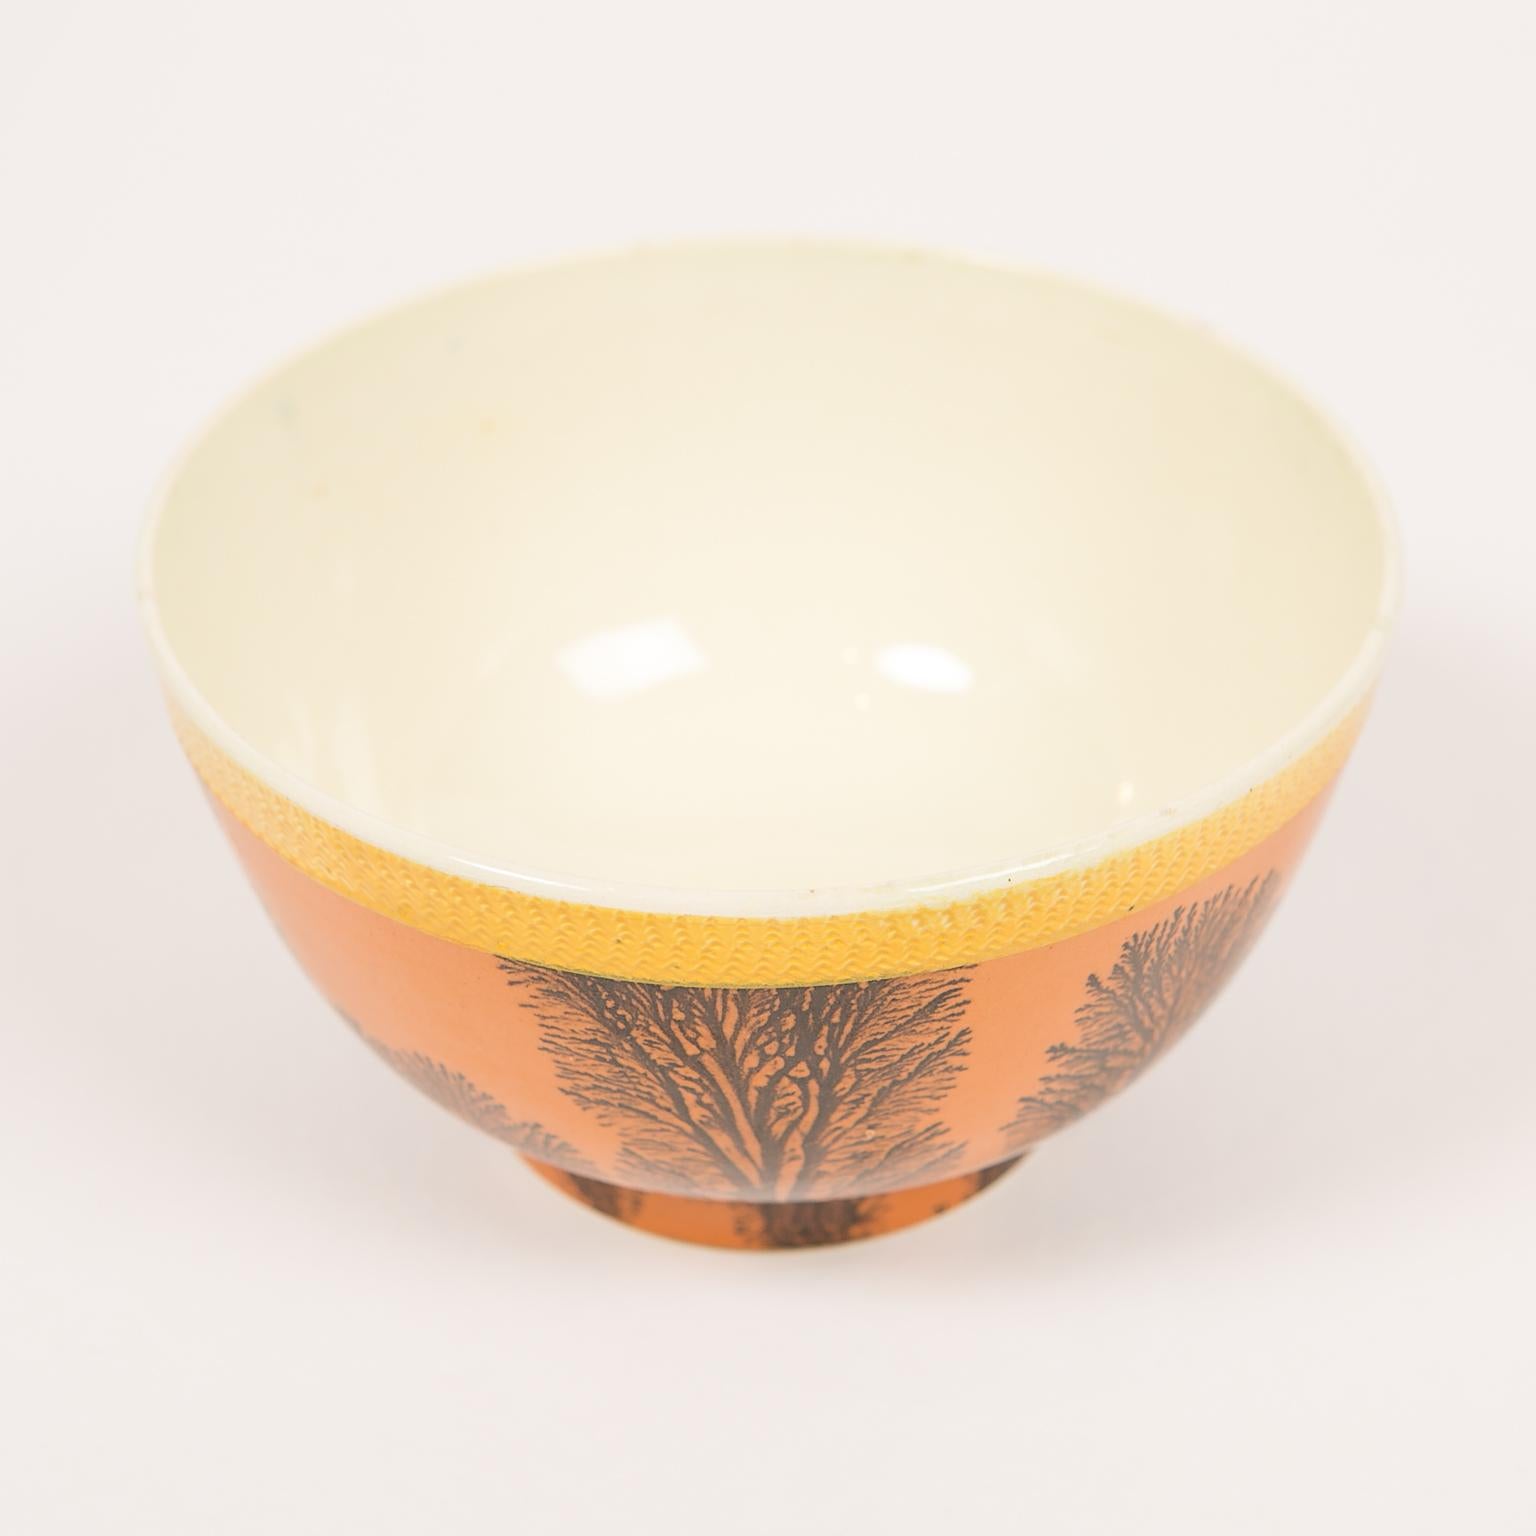 Folk Art Creamware Mochaware Bowl Decorated with Trees circa 1800